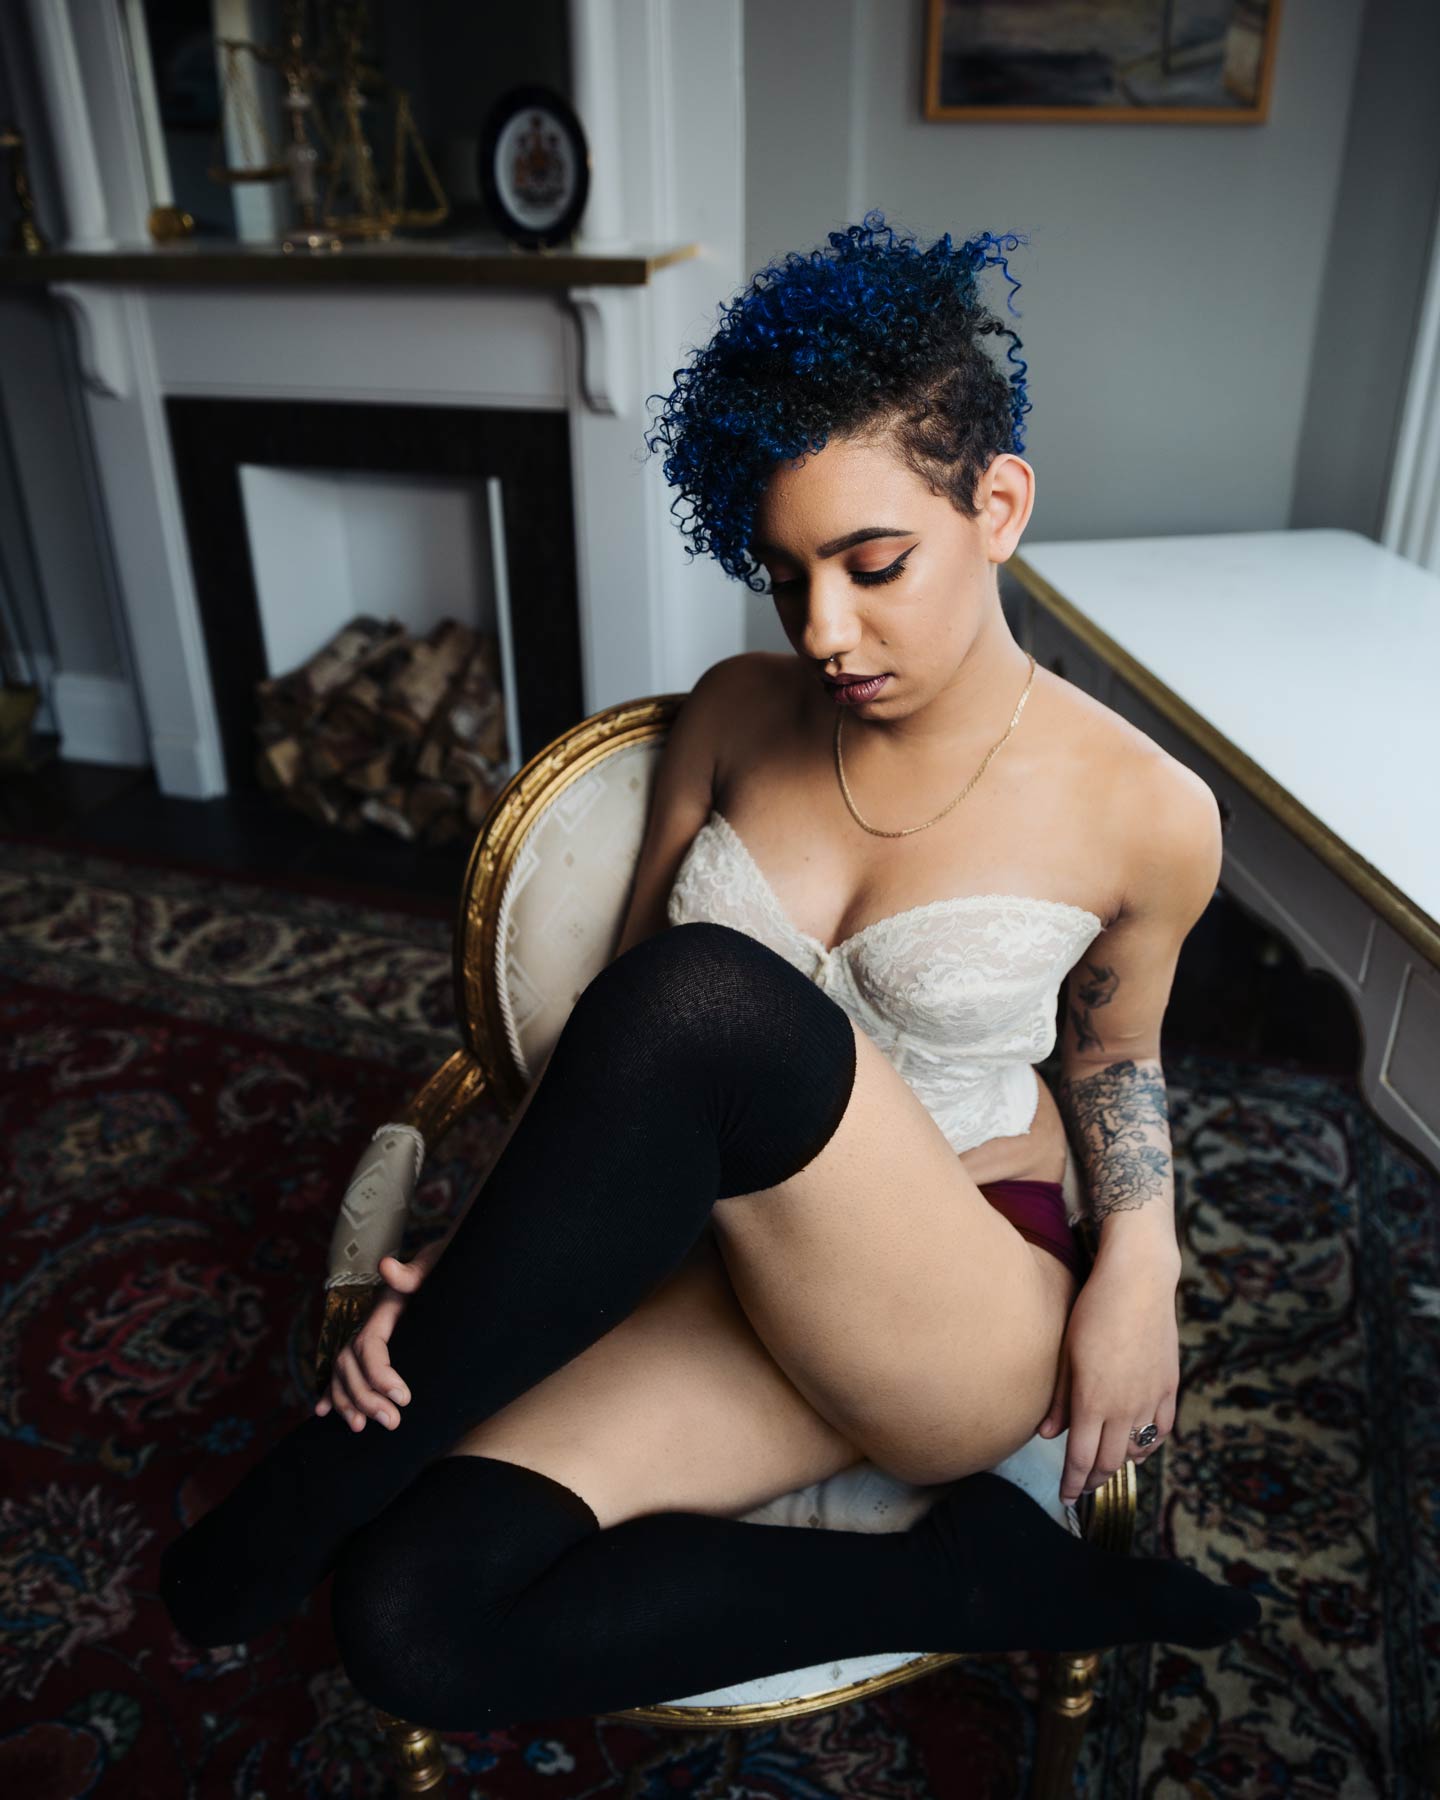 boudoir photography for women